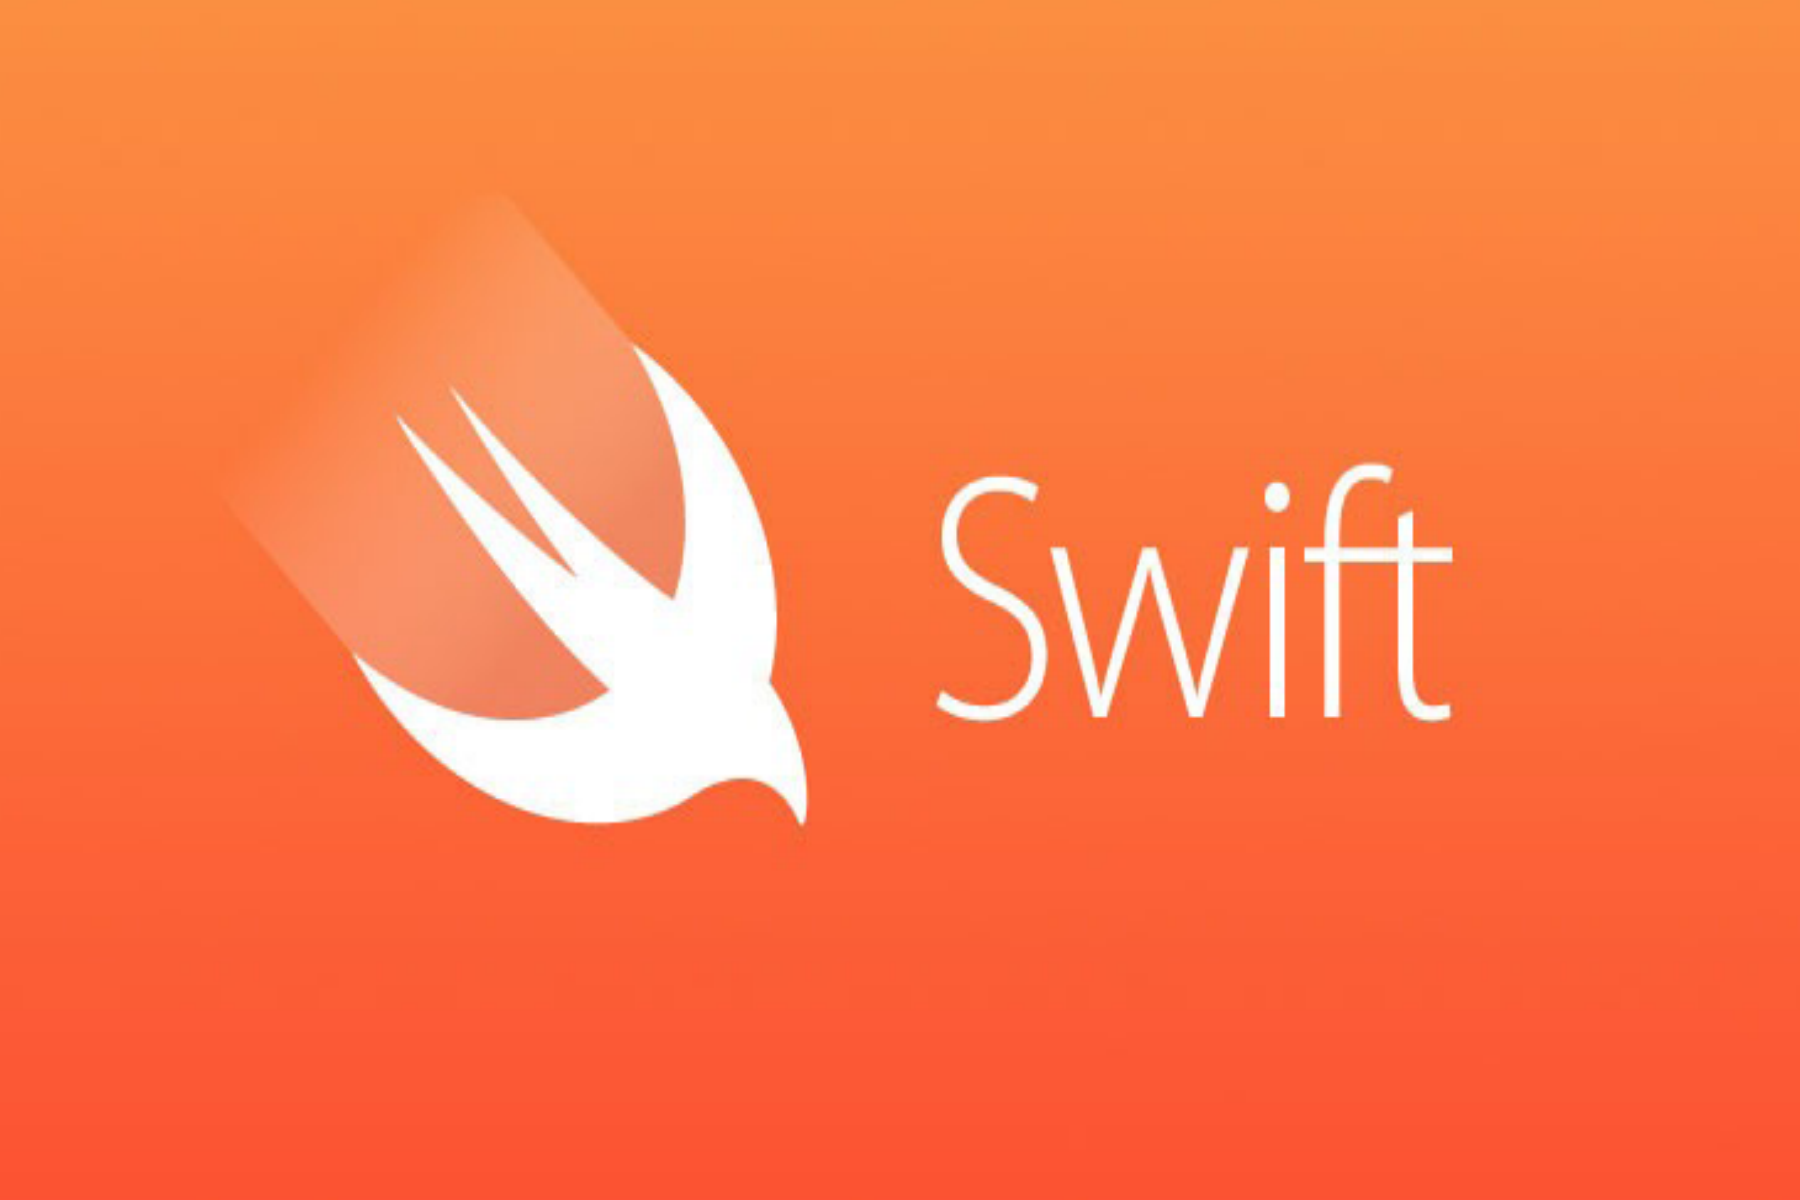 iOS Swift Training in chennai